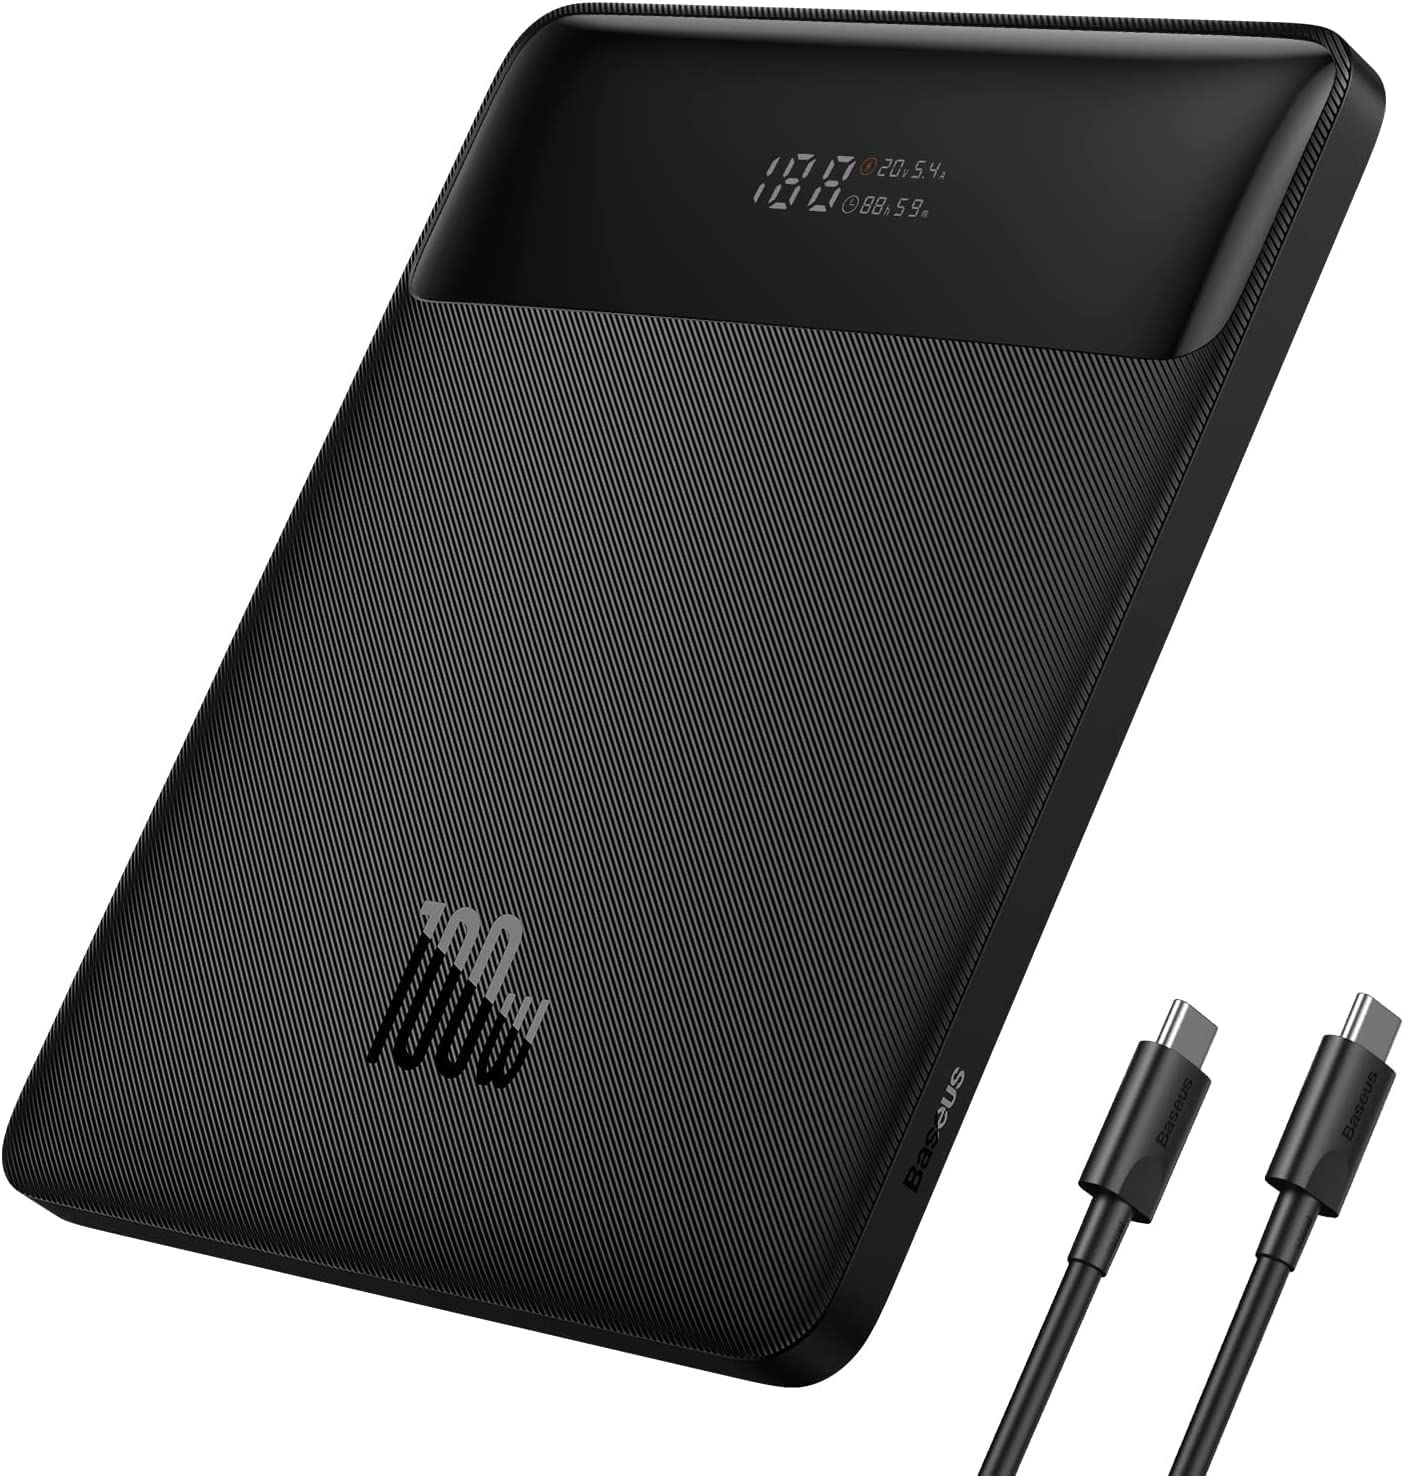 Portable Power Bank 10,000mAh Fast Charge Dual USB